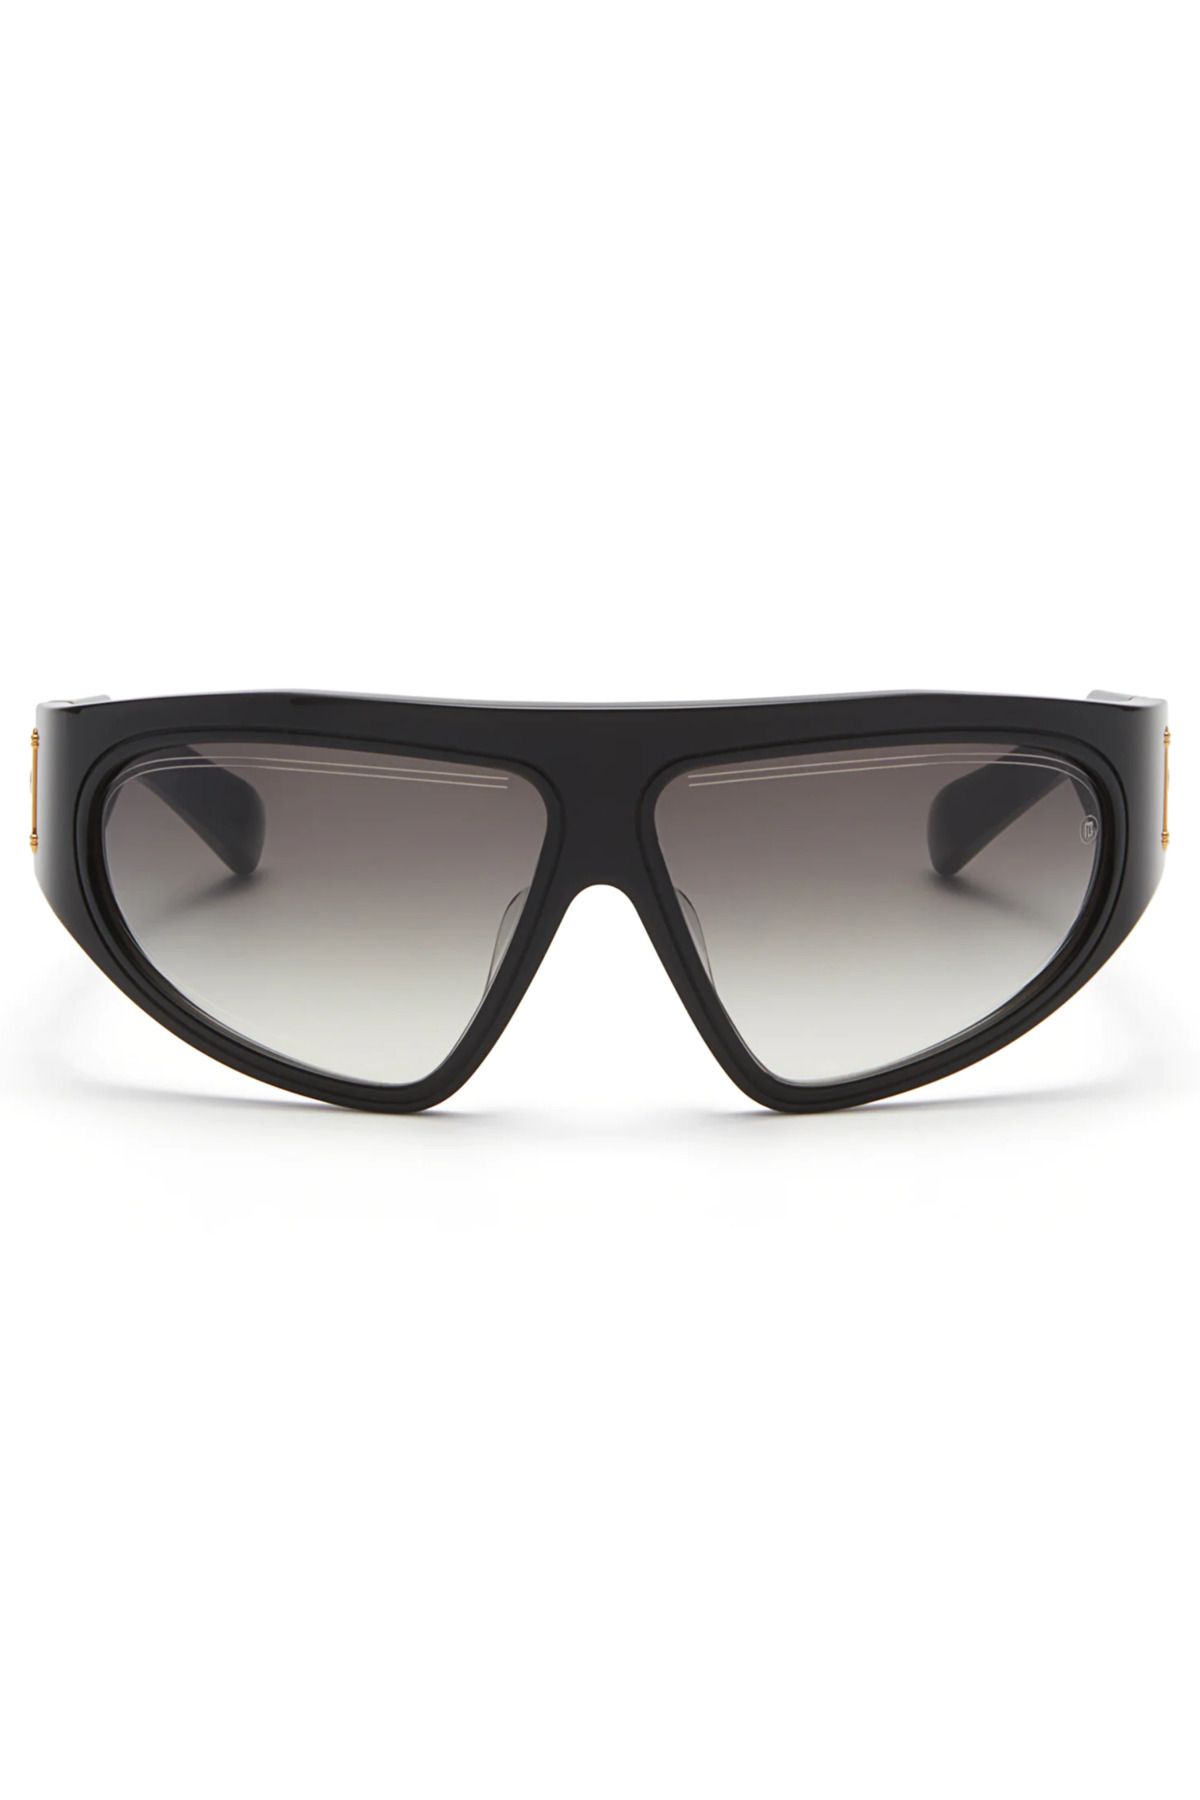 BALMAIN B-Escape Oval Sunglasses